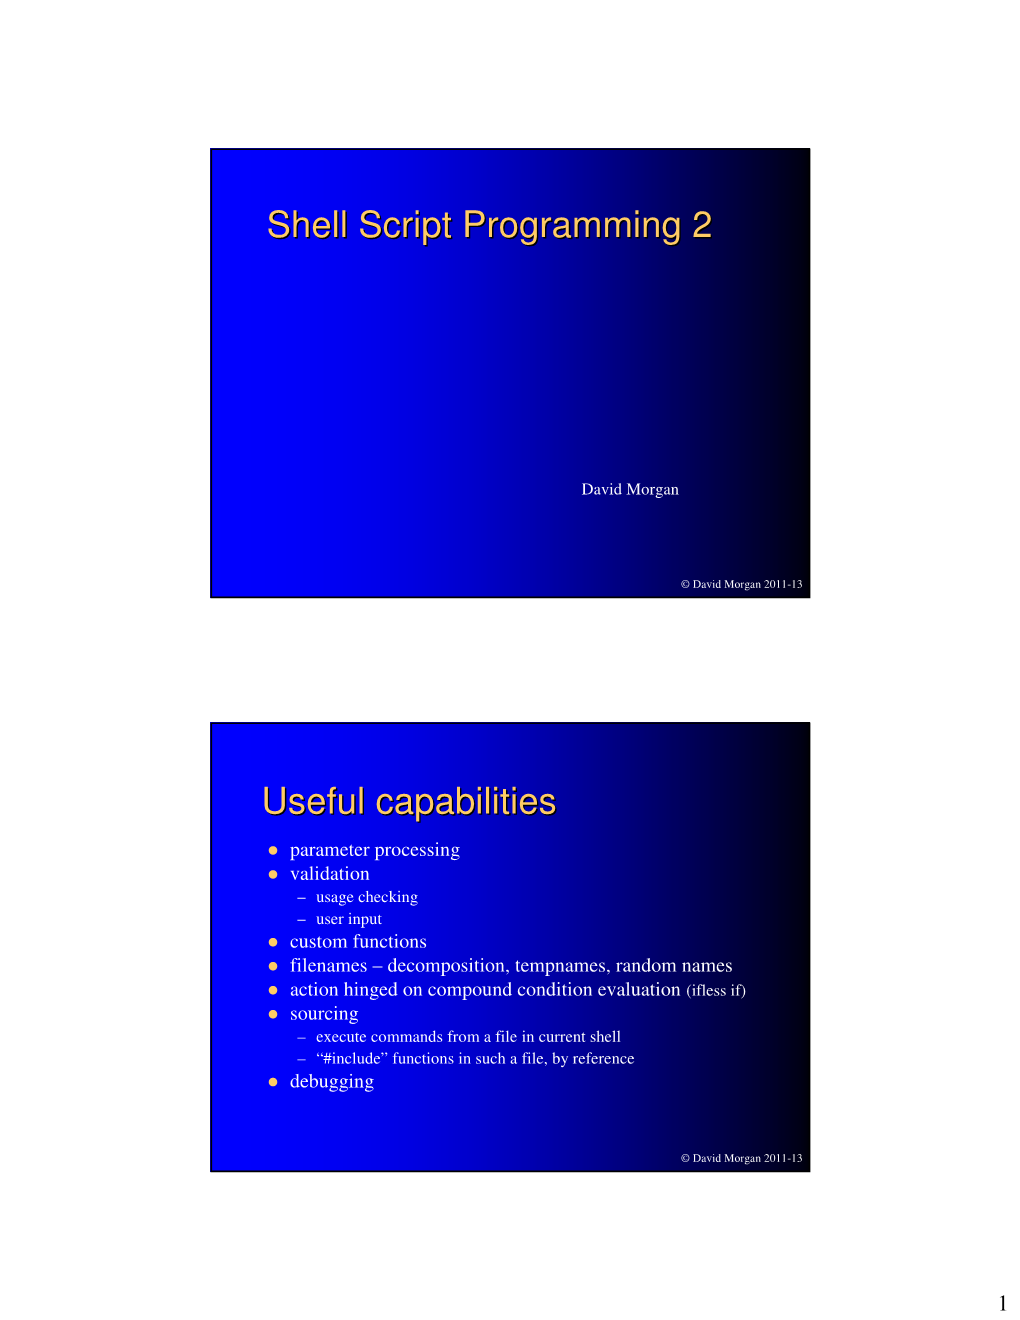 Shell Script Programming 2 Useful Capabilities